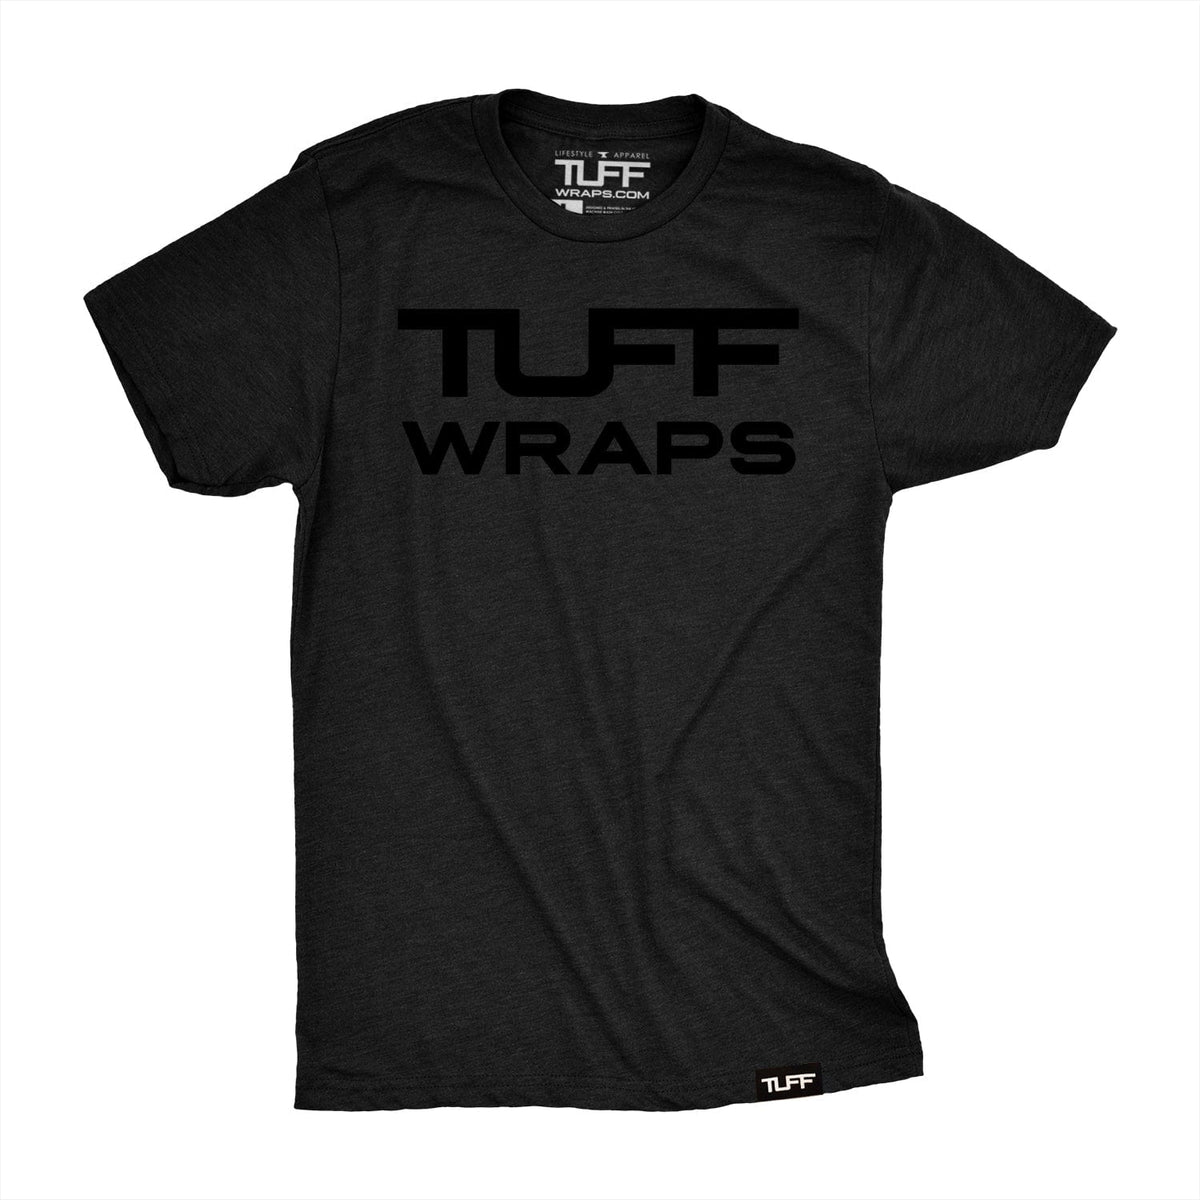 TUFF Blackout Original Tee TuffWraps.com